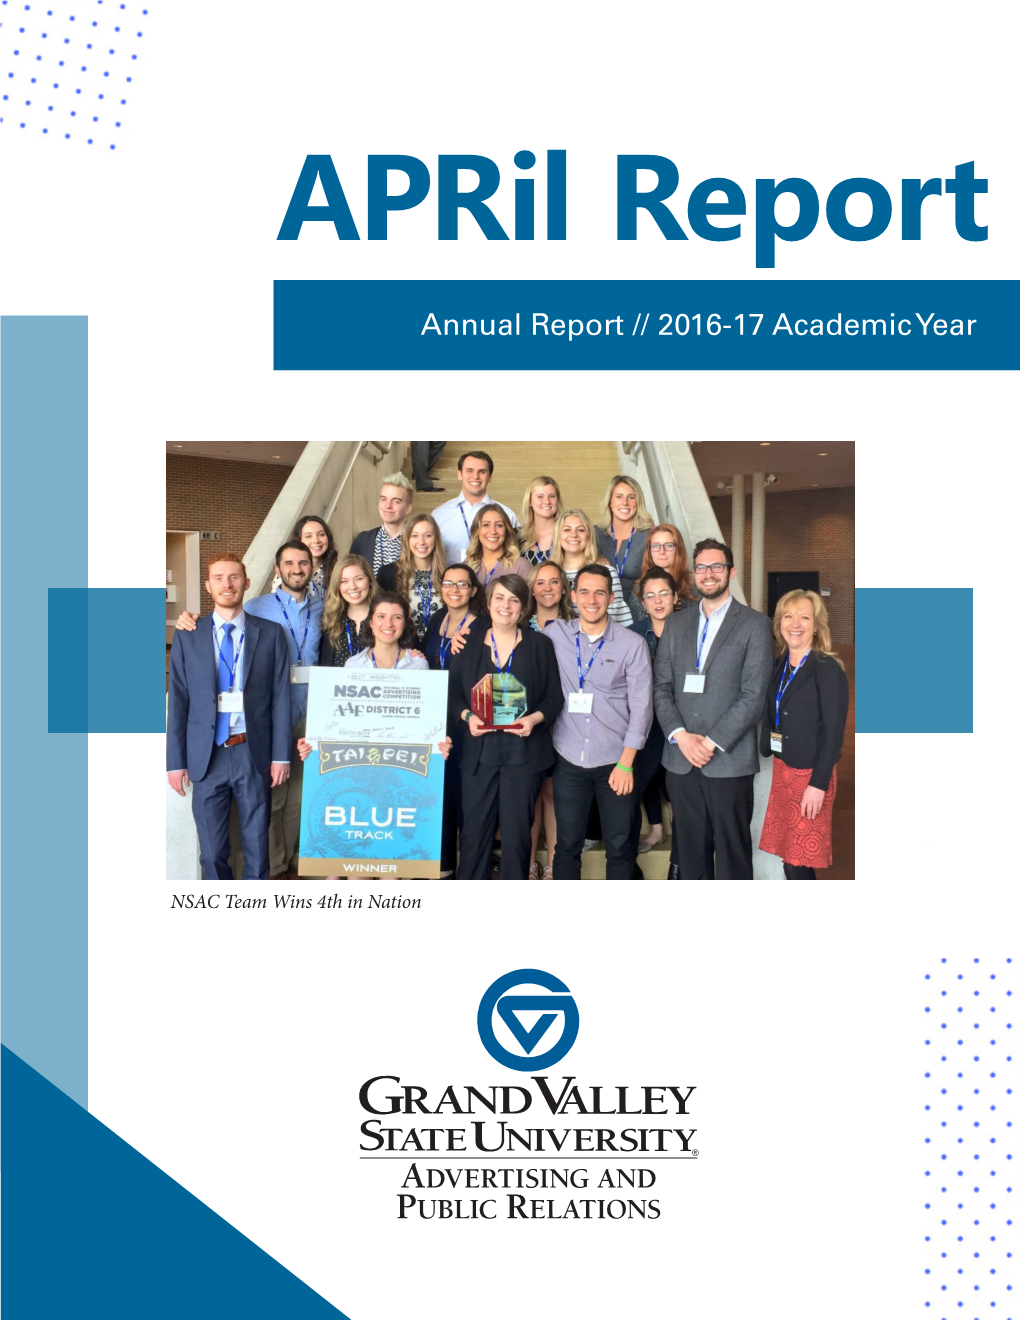 The April Report